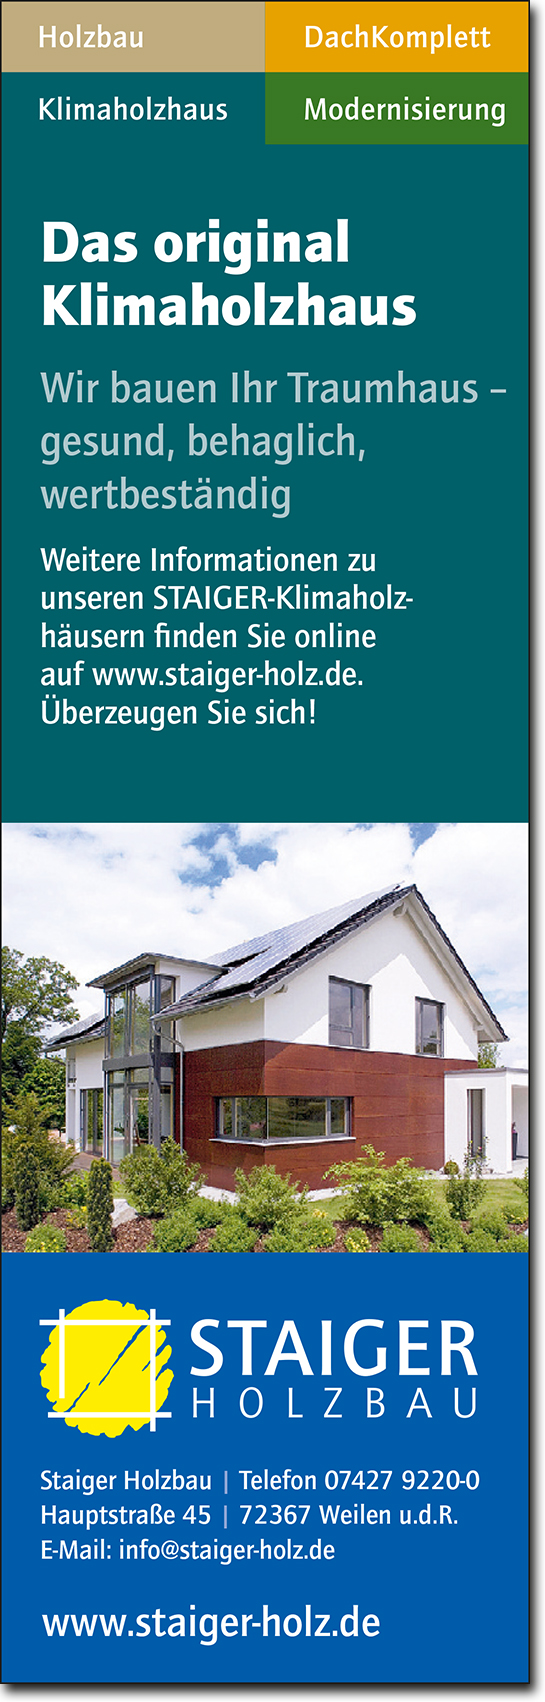 Staiger Holzbau GmbH & Co. KG